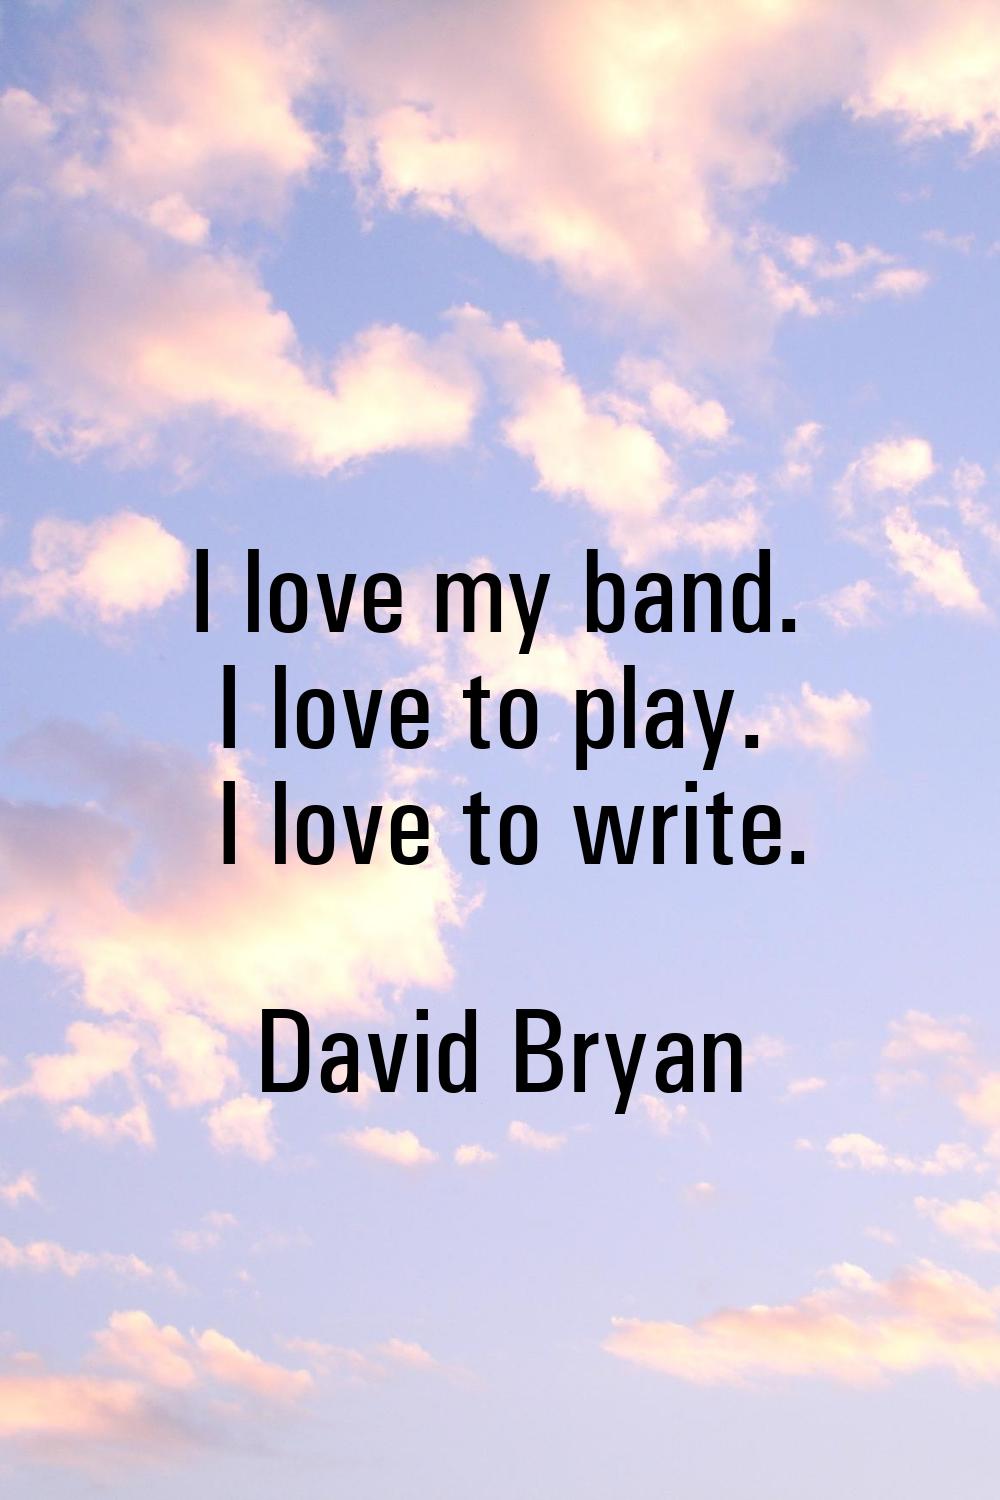 I love my band. I love to play. I love to write.